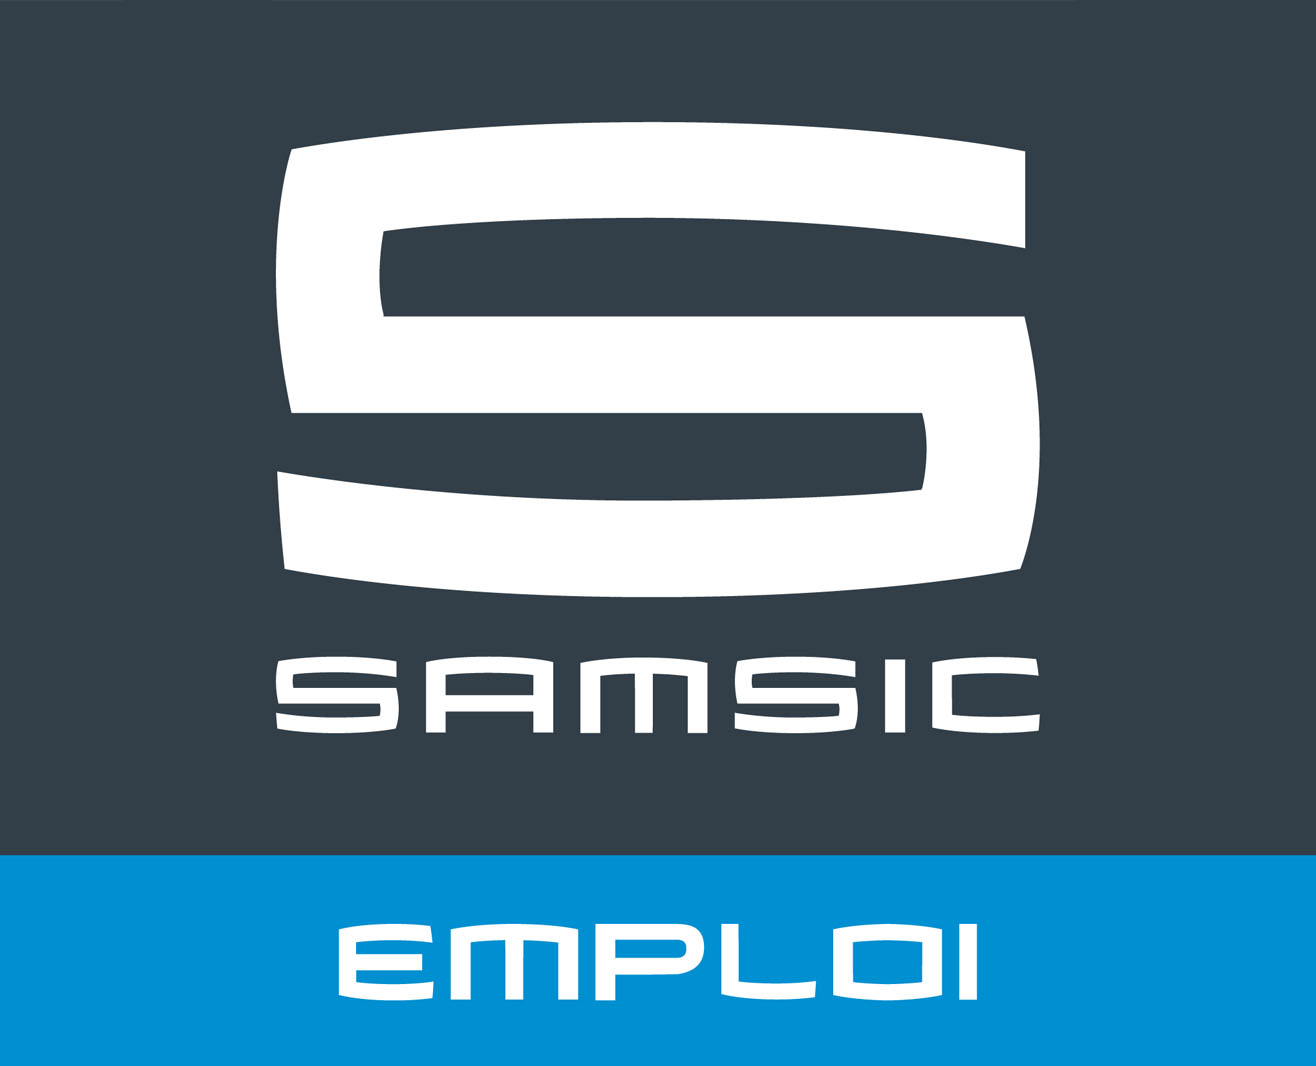 SAMSIC EMPLOI